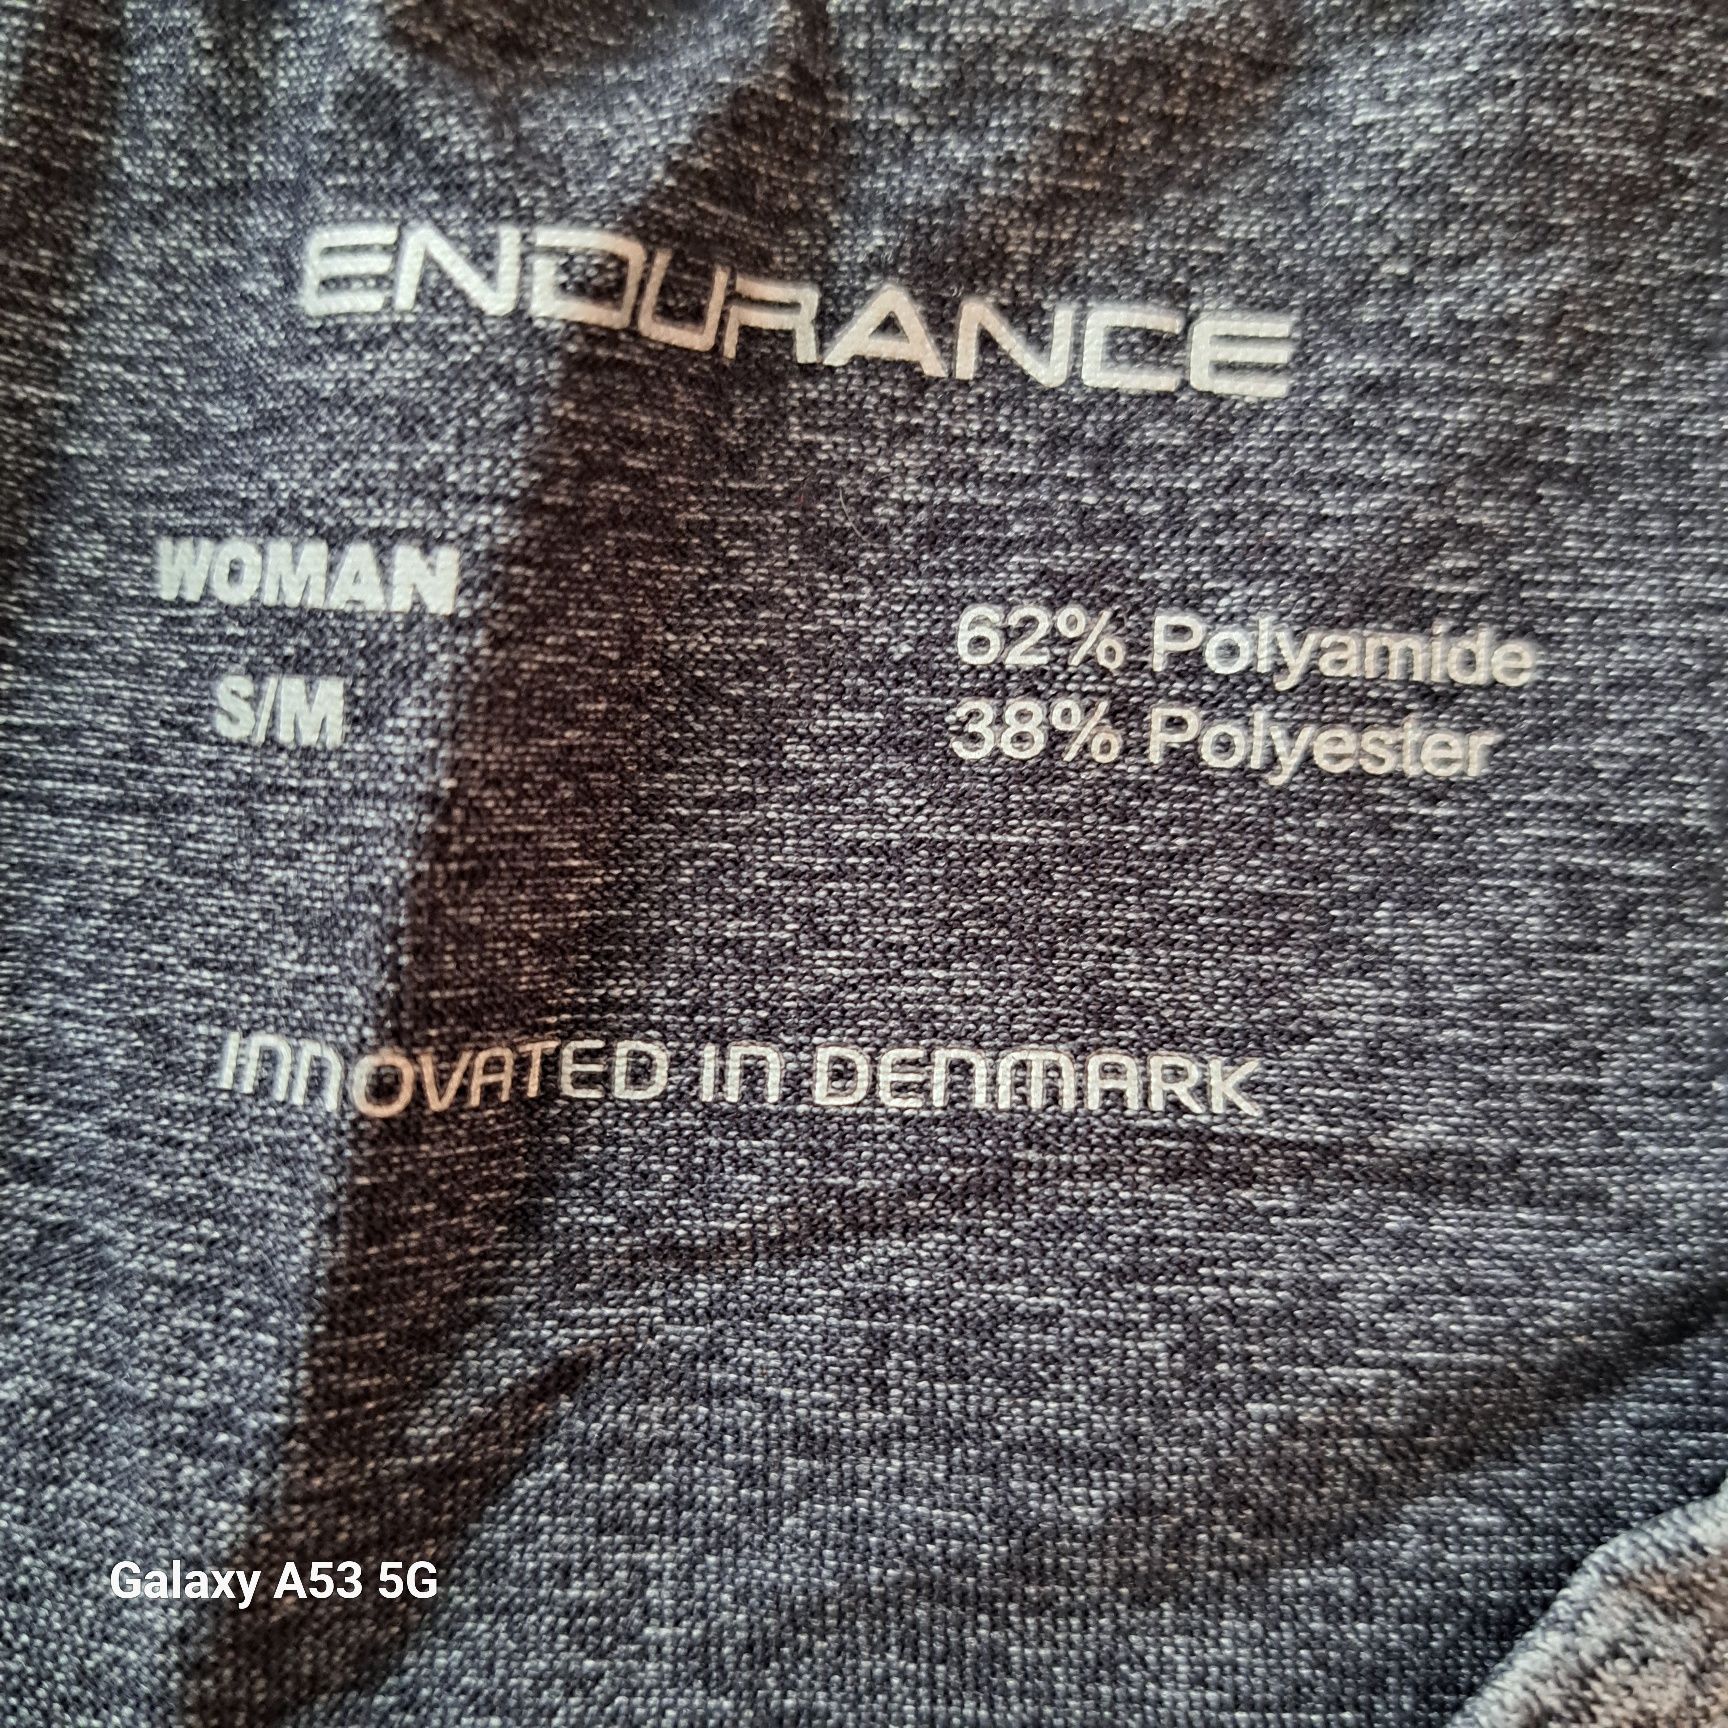 Koszulka endurance s/m